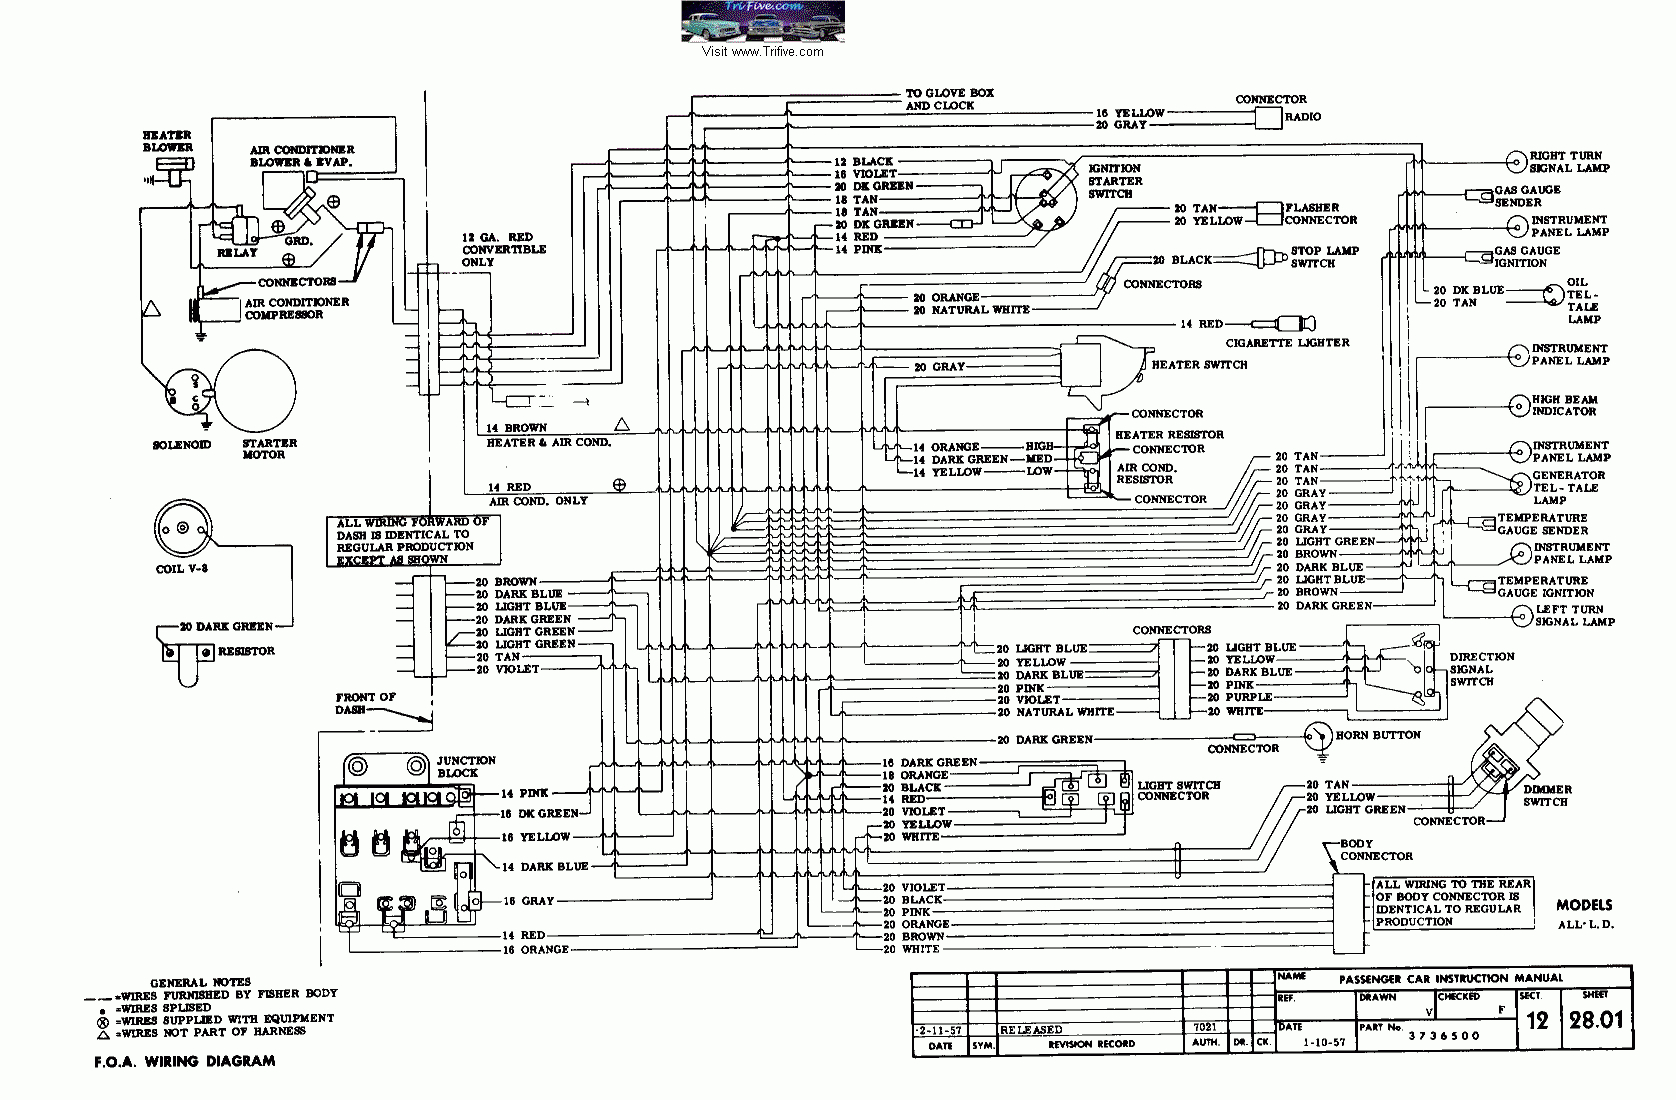 57 Chevy Wiring | Wiring Diagram - Turn Signal Wiring Diagram Chevy Truck